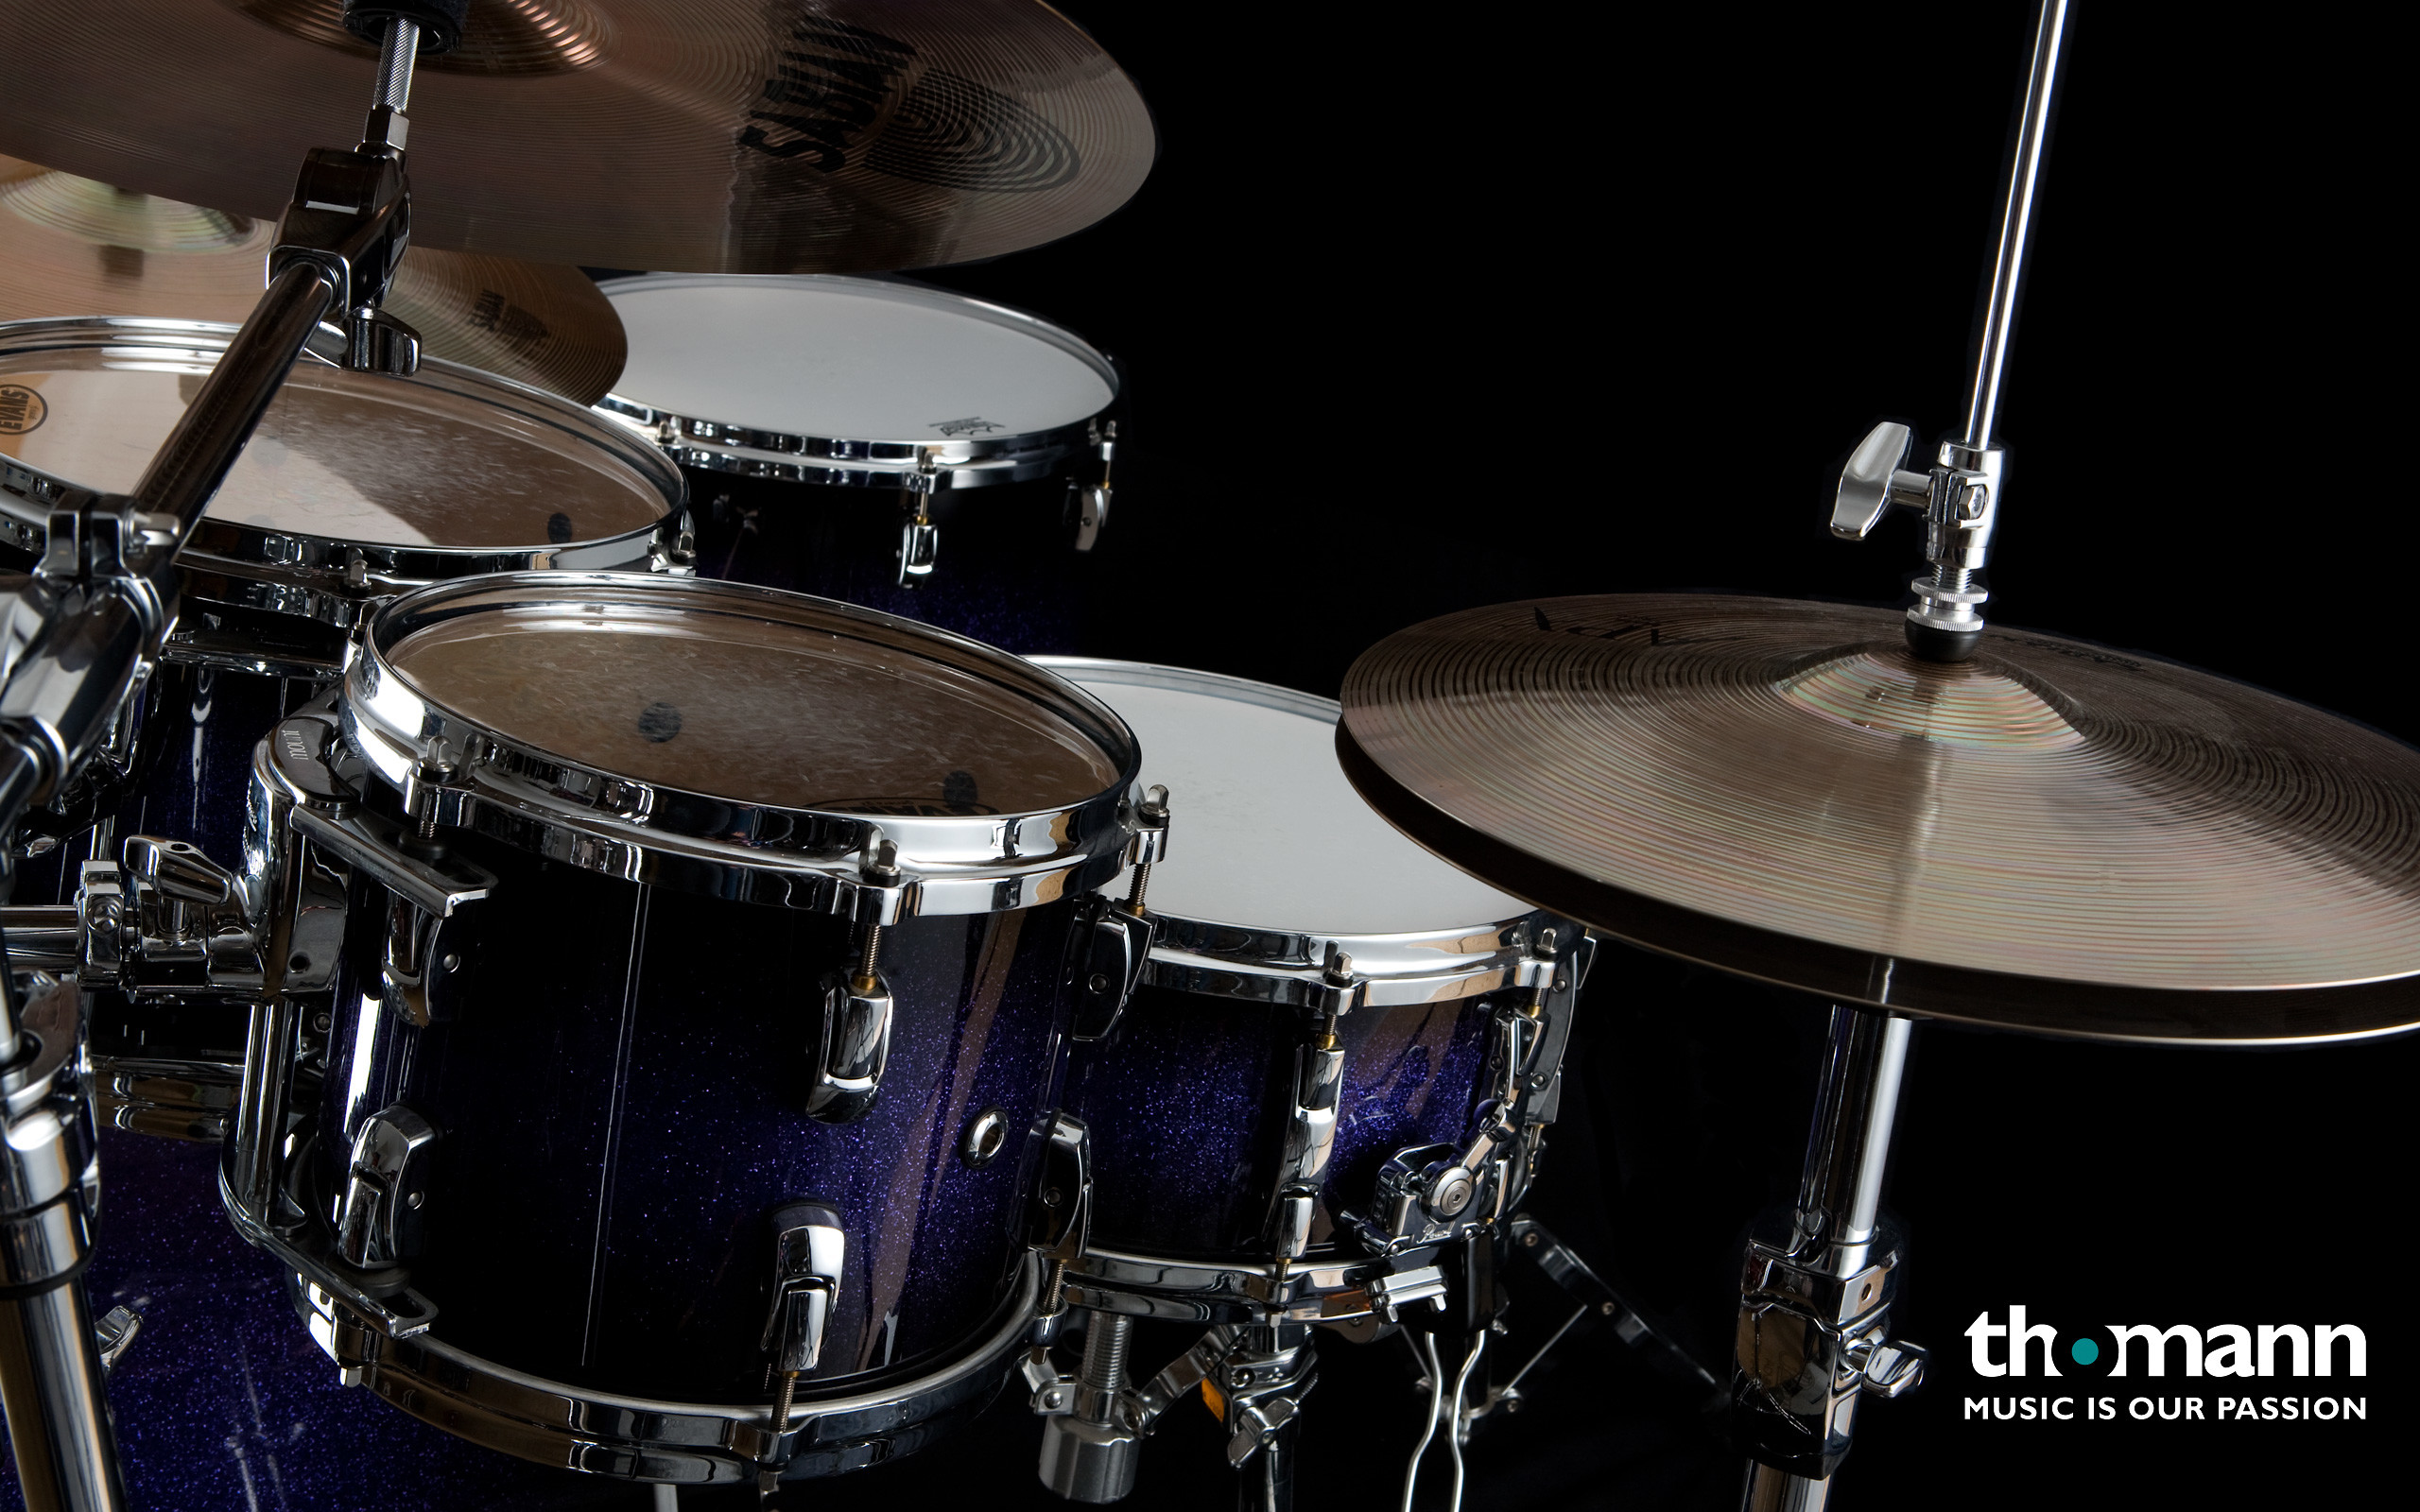 2560x1600 Drums-full-hd-wallpaper-for-desktop-background-download-drums .